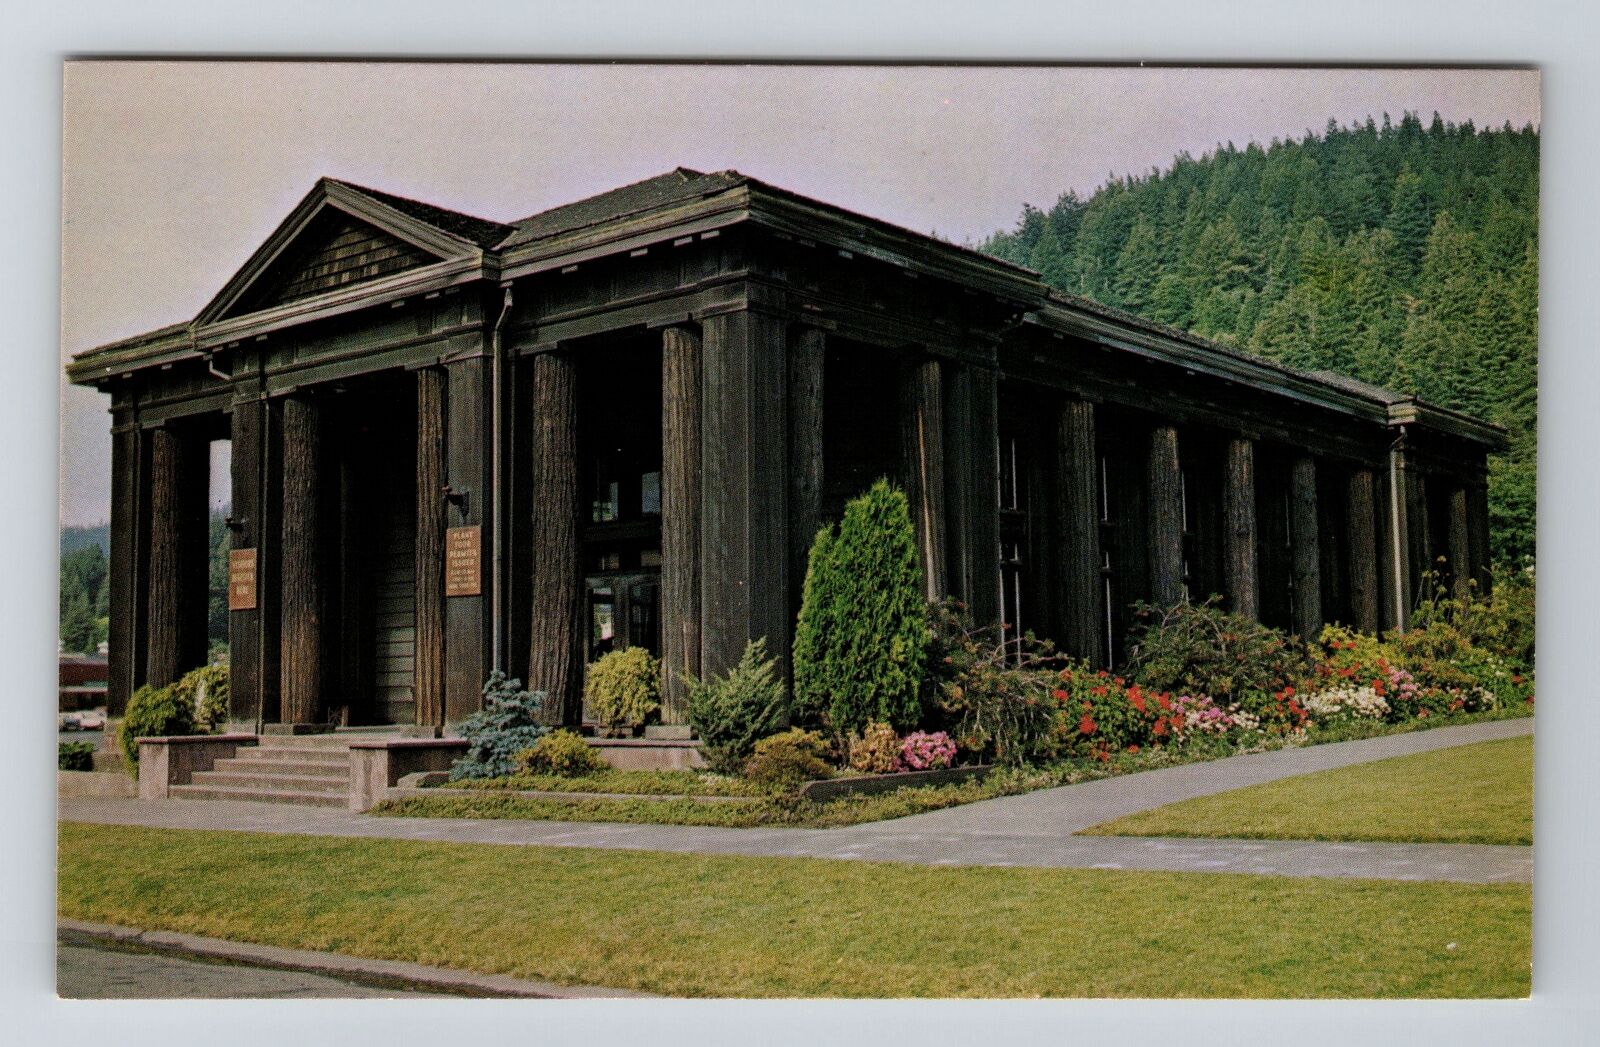 Scotia CA-California, Museum, Large Building with Plants, Vintage Postcard